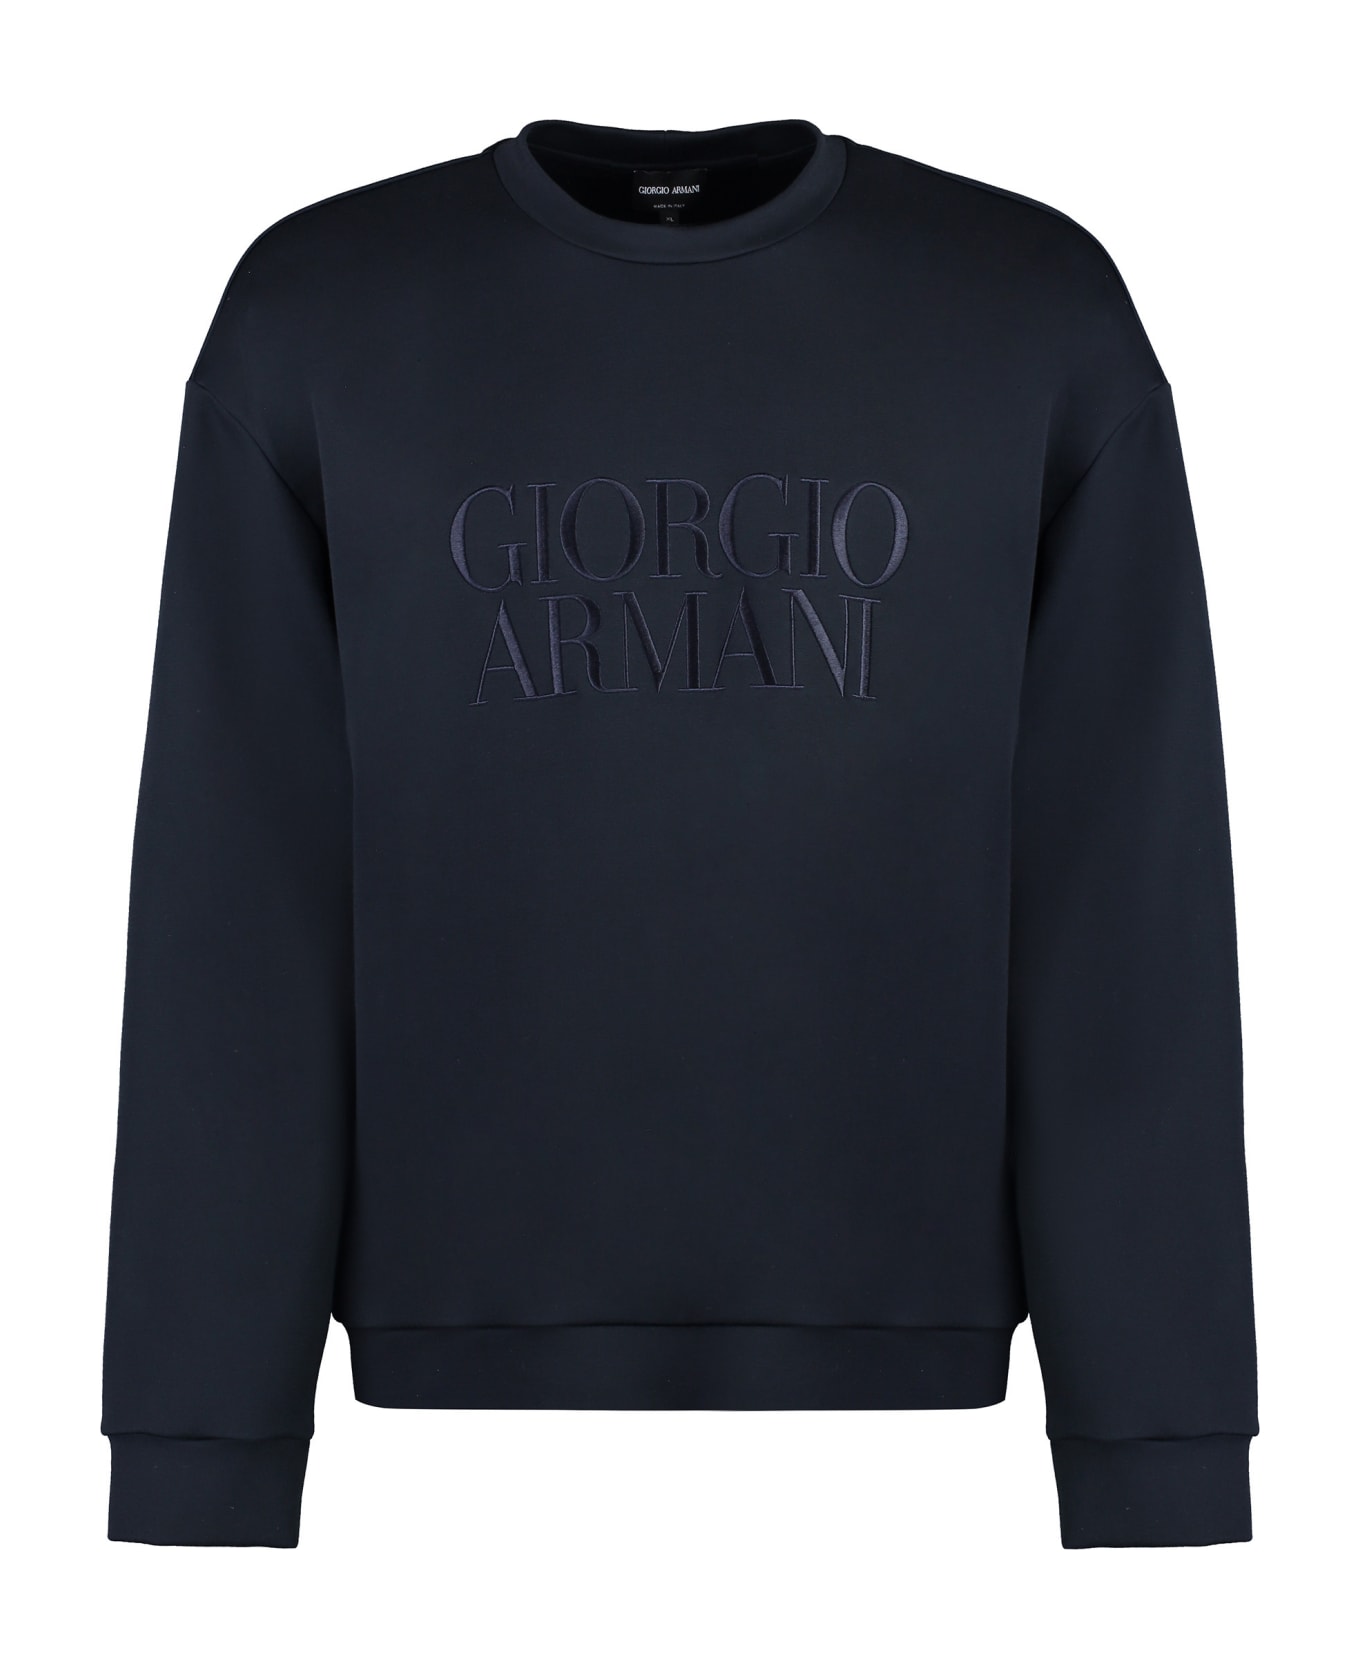 Giorgio Armani Embroidered Logo Crew-neck Sweatshirt - Ubwz